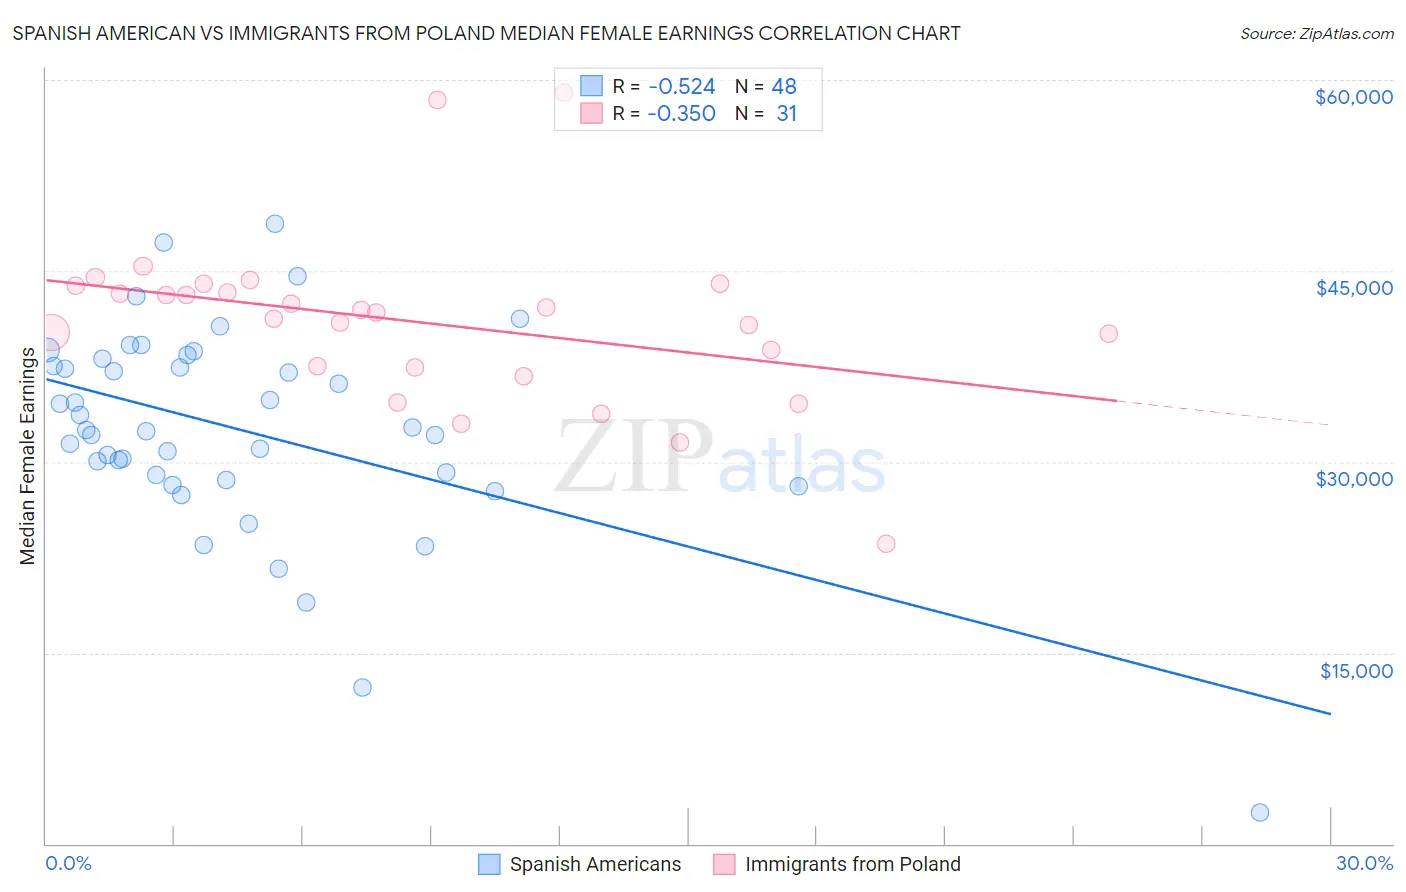 Spanish American vs Immigrants from Poland Median Female Earnings